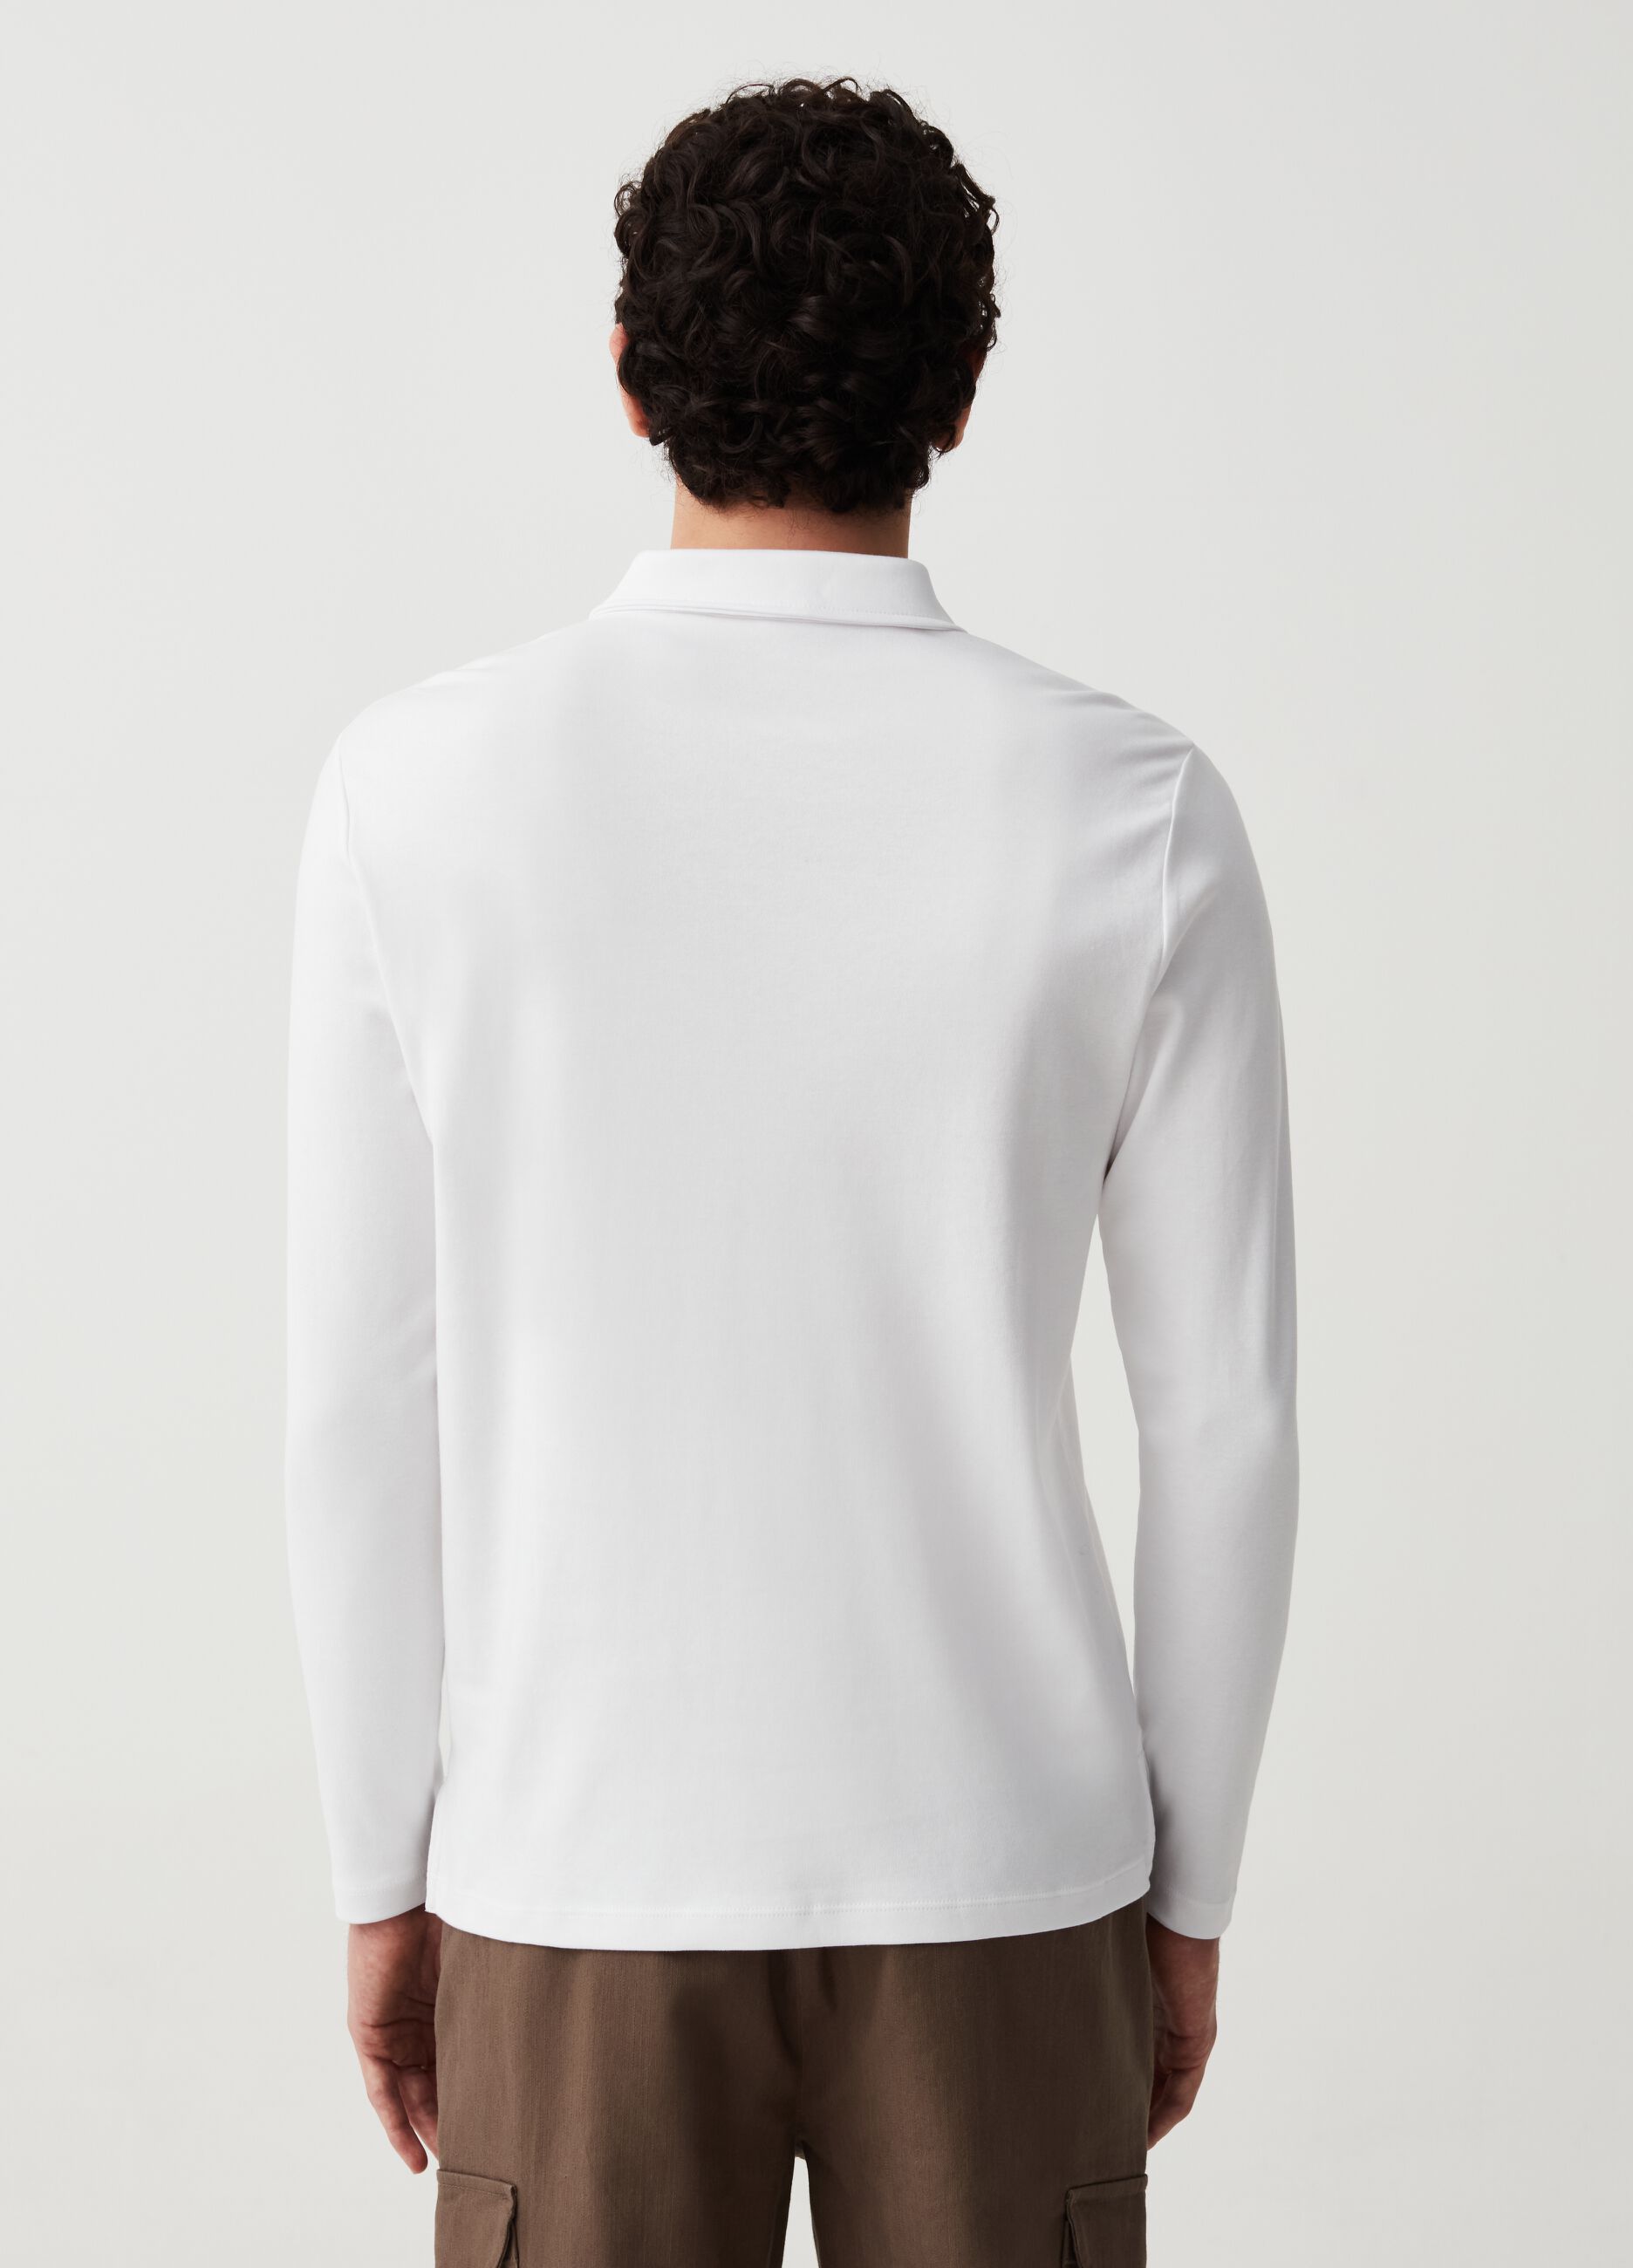 Long-sleeved cotton polo shirt